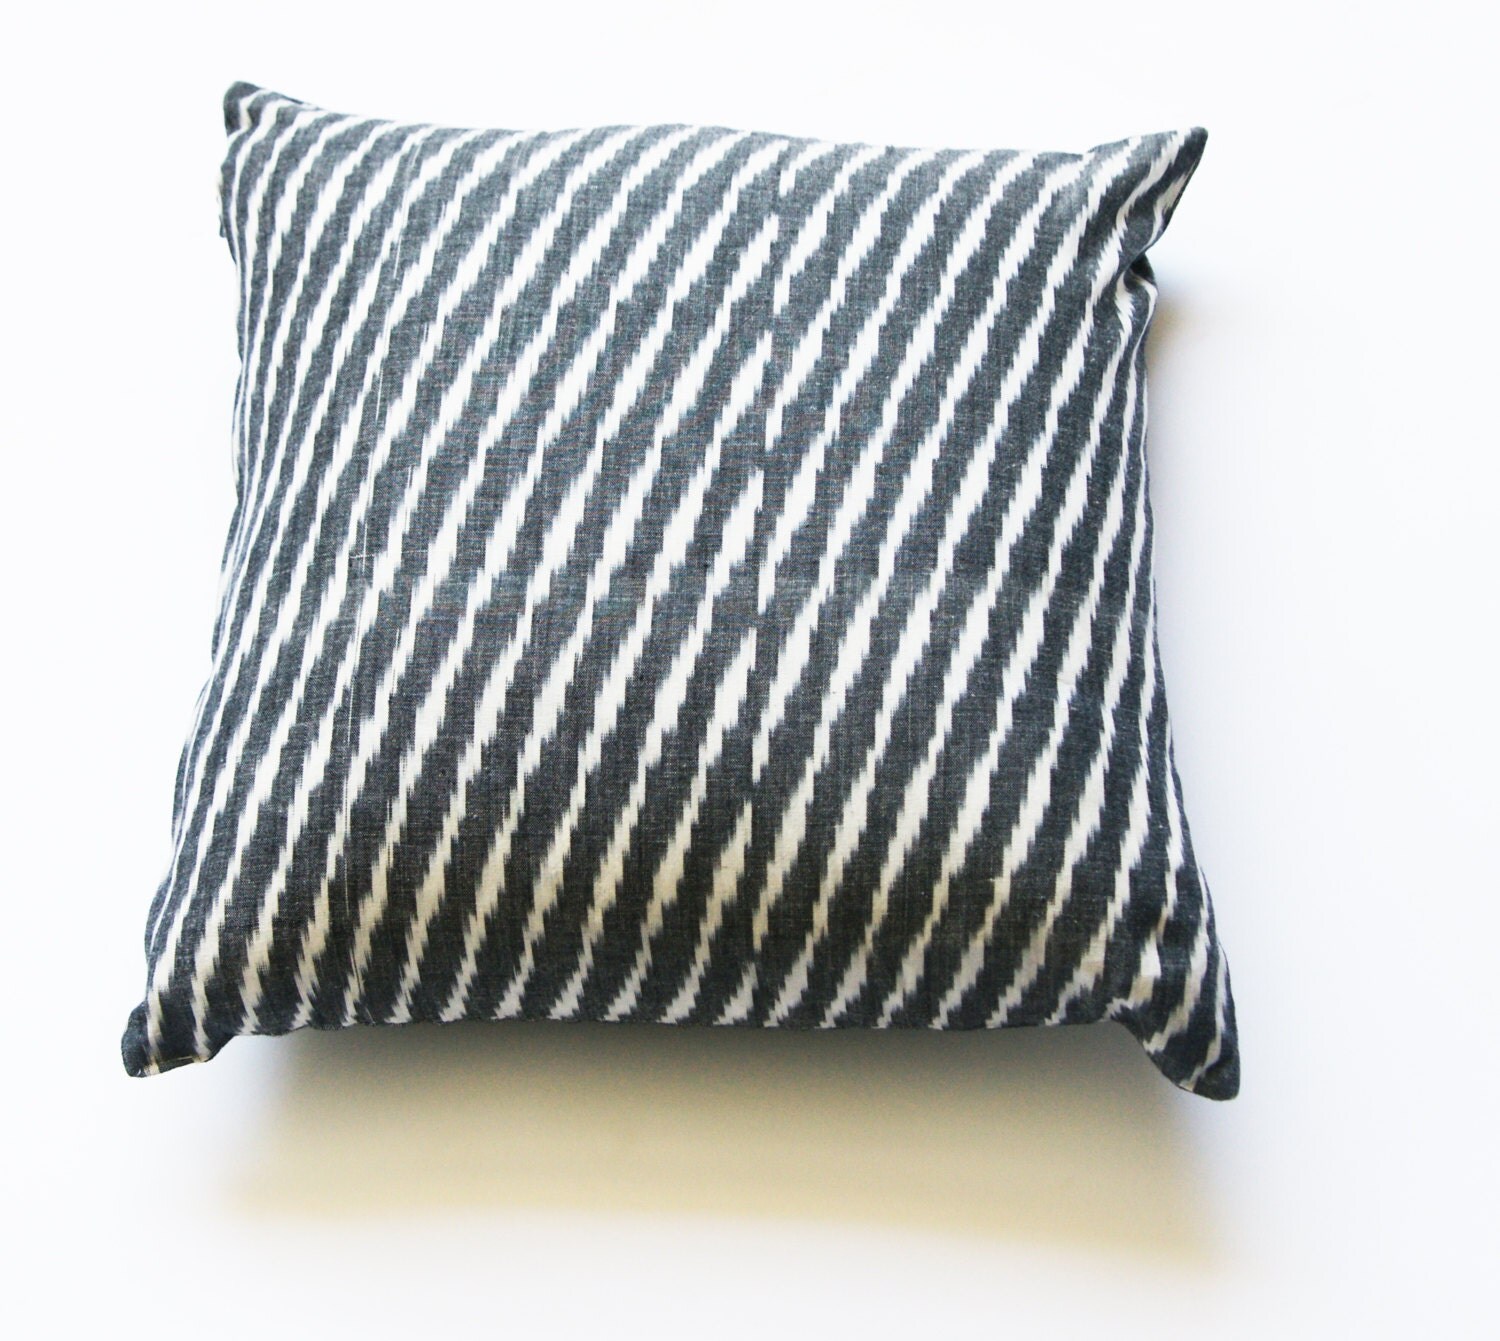 Square Toss Pillow Grey Ikat Zebra Stripe Handwoven by RusticLoom